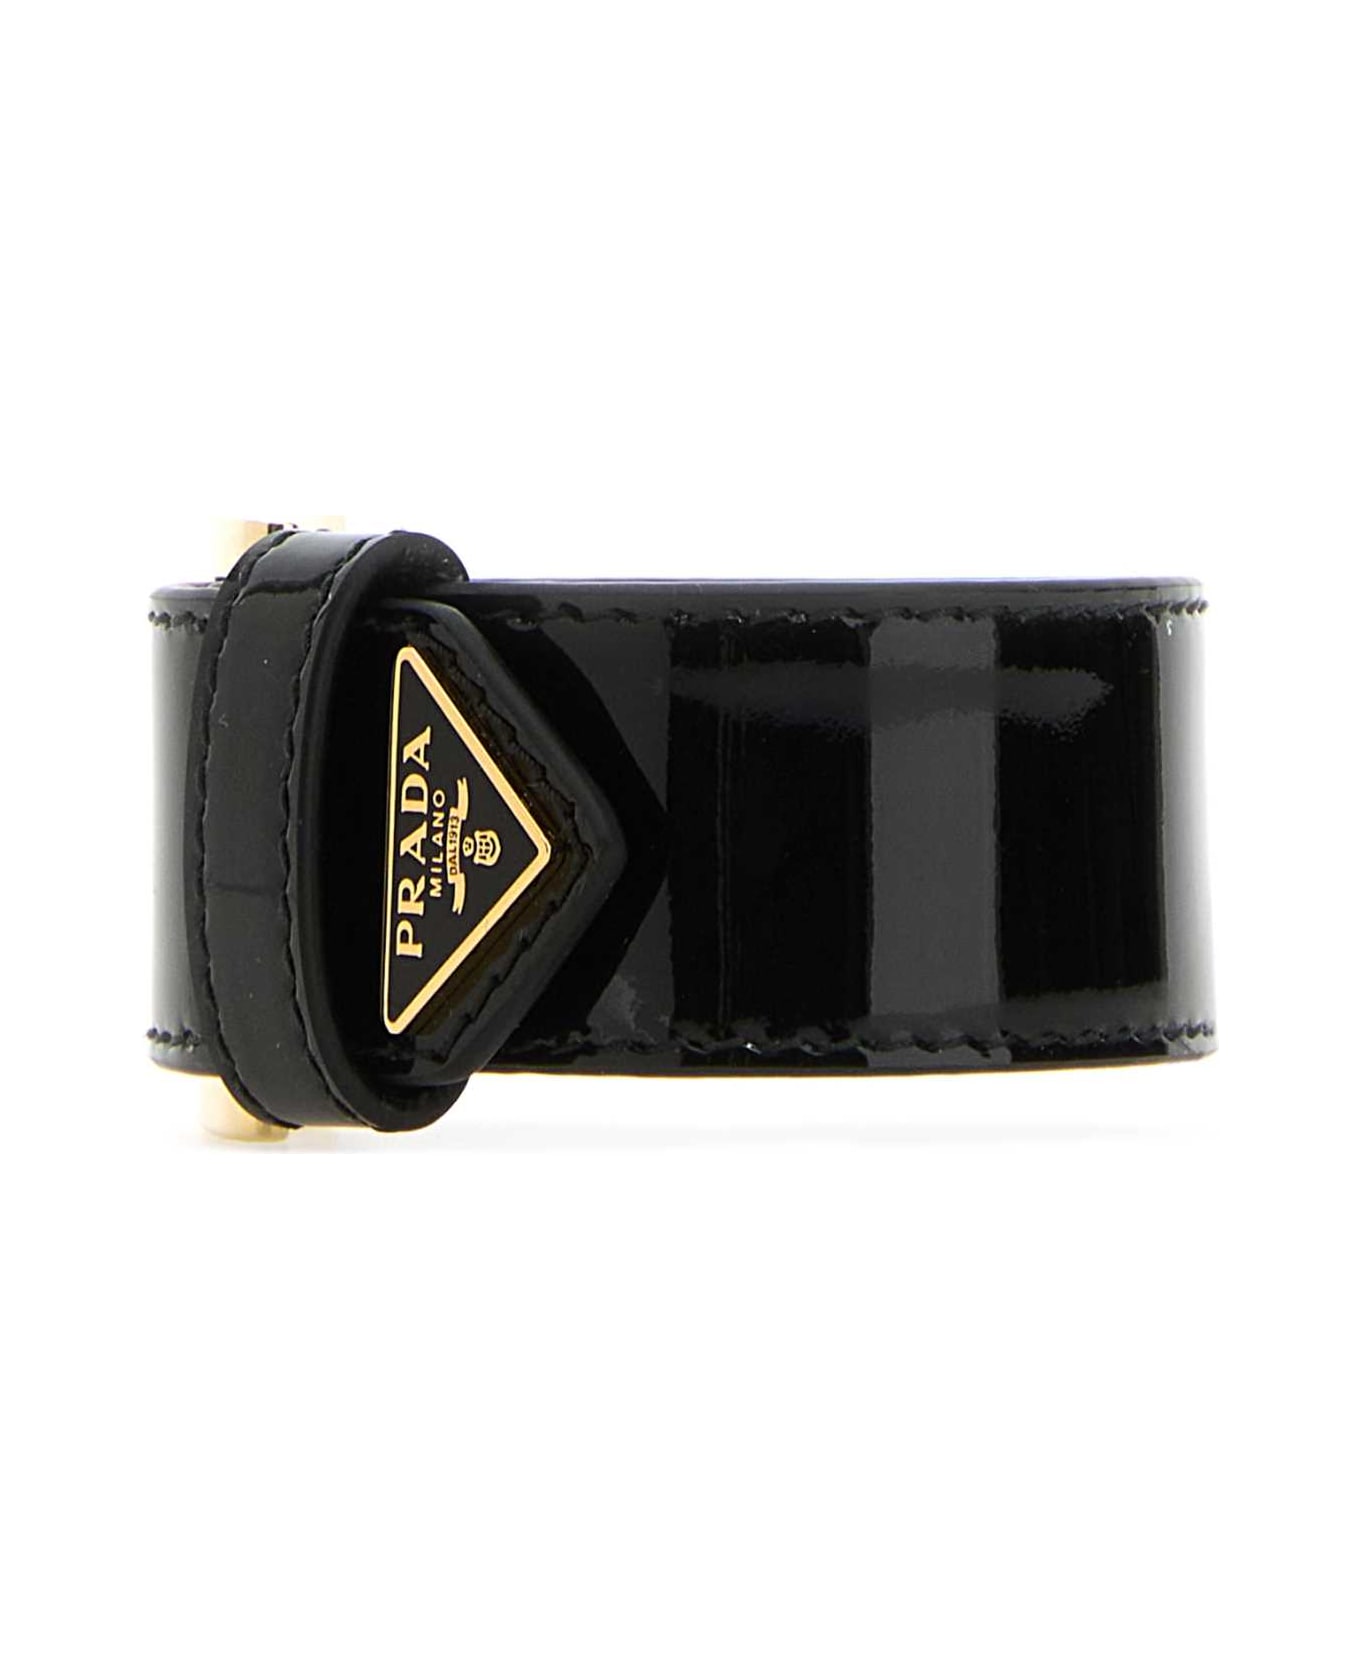 Prada Black Leather Bracelet - NEROR ブレスレット